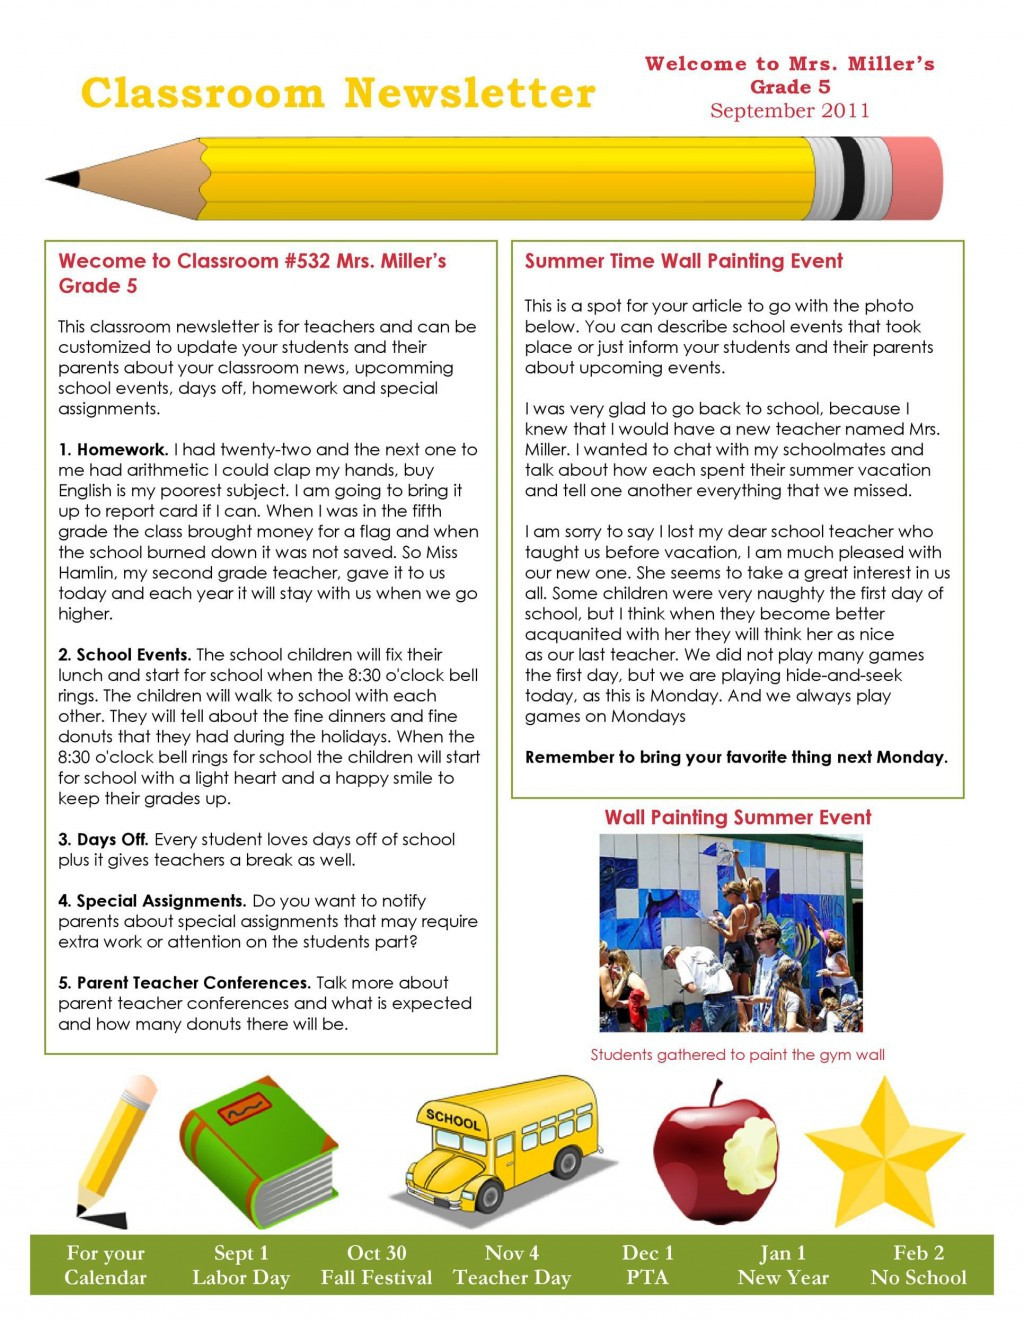 School Newsletter Template Free Elementary School Newsletter Template Addictionary